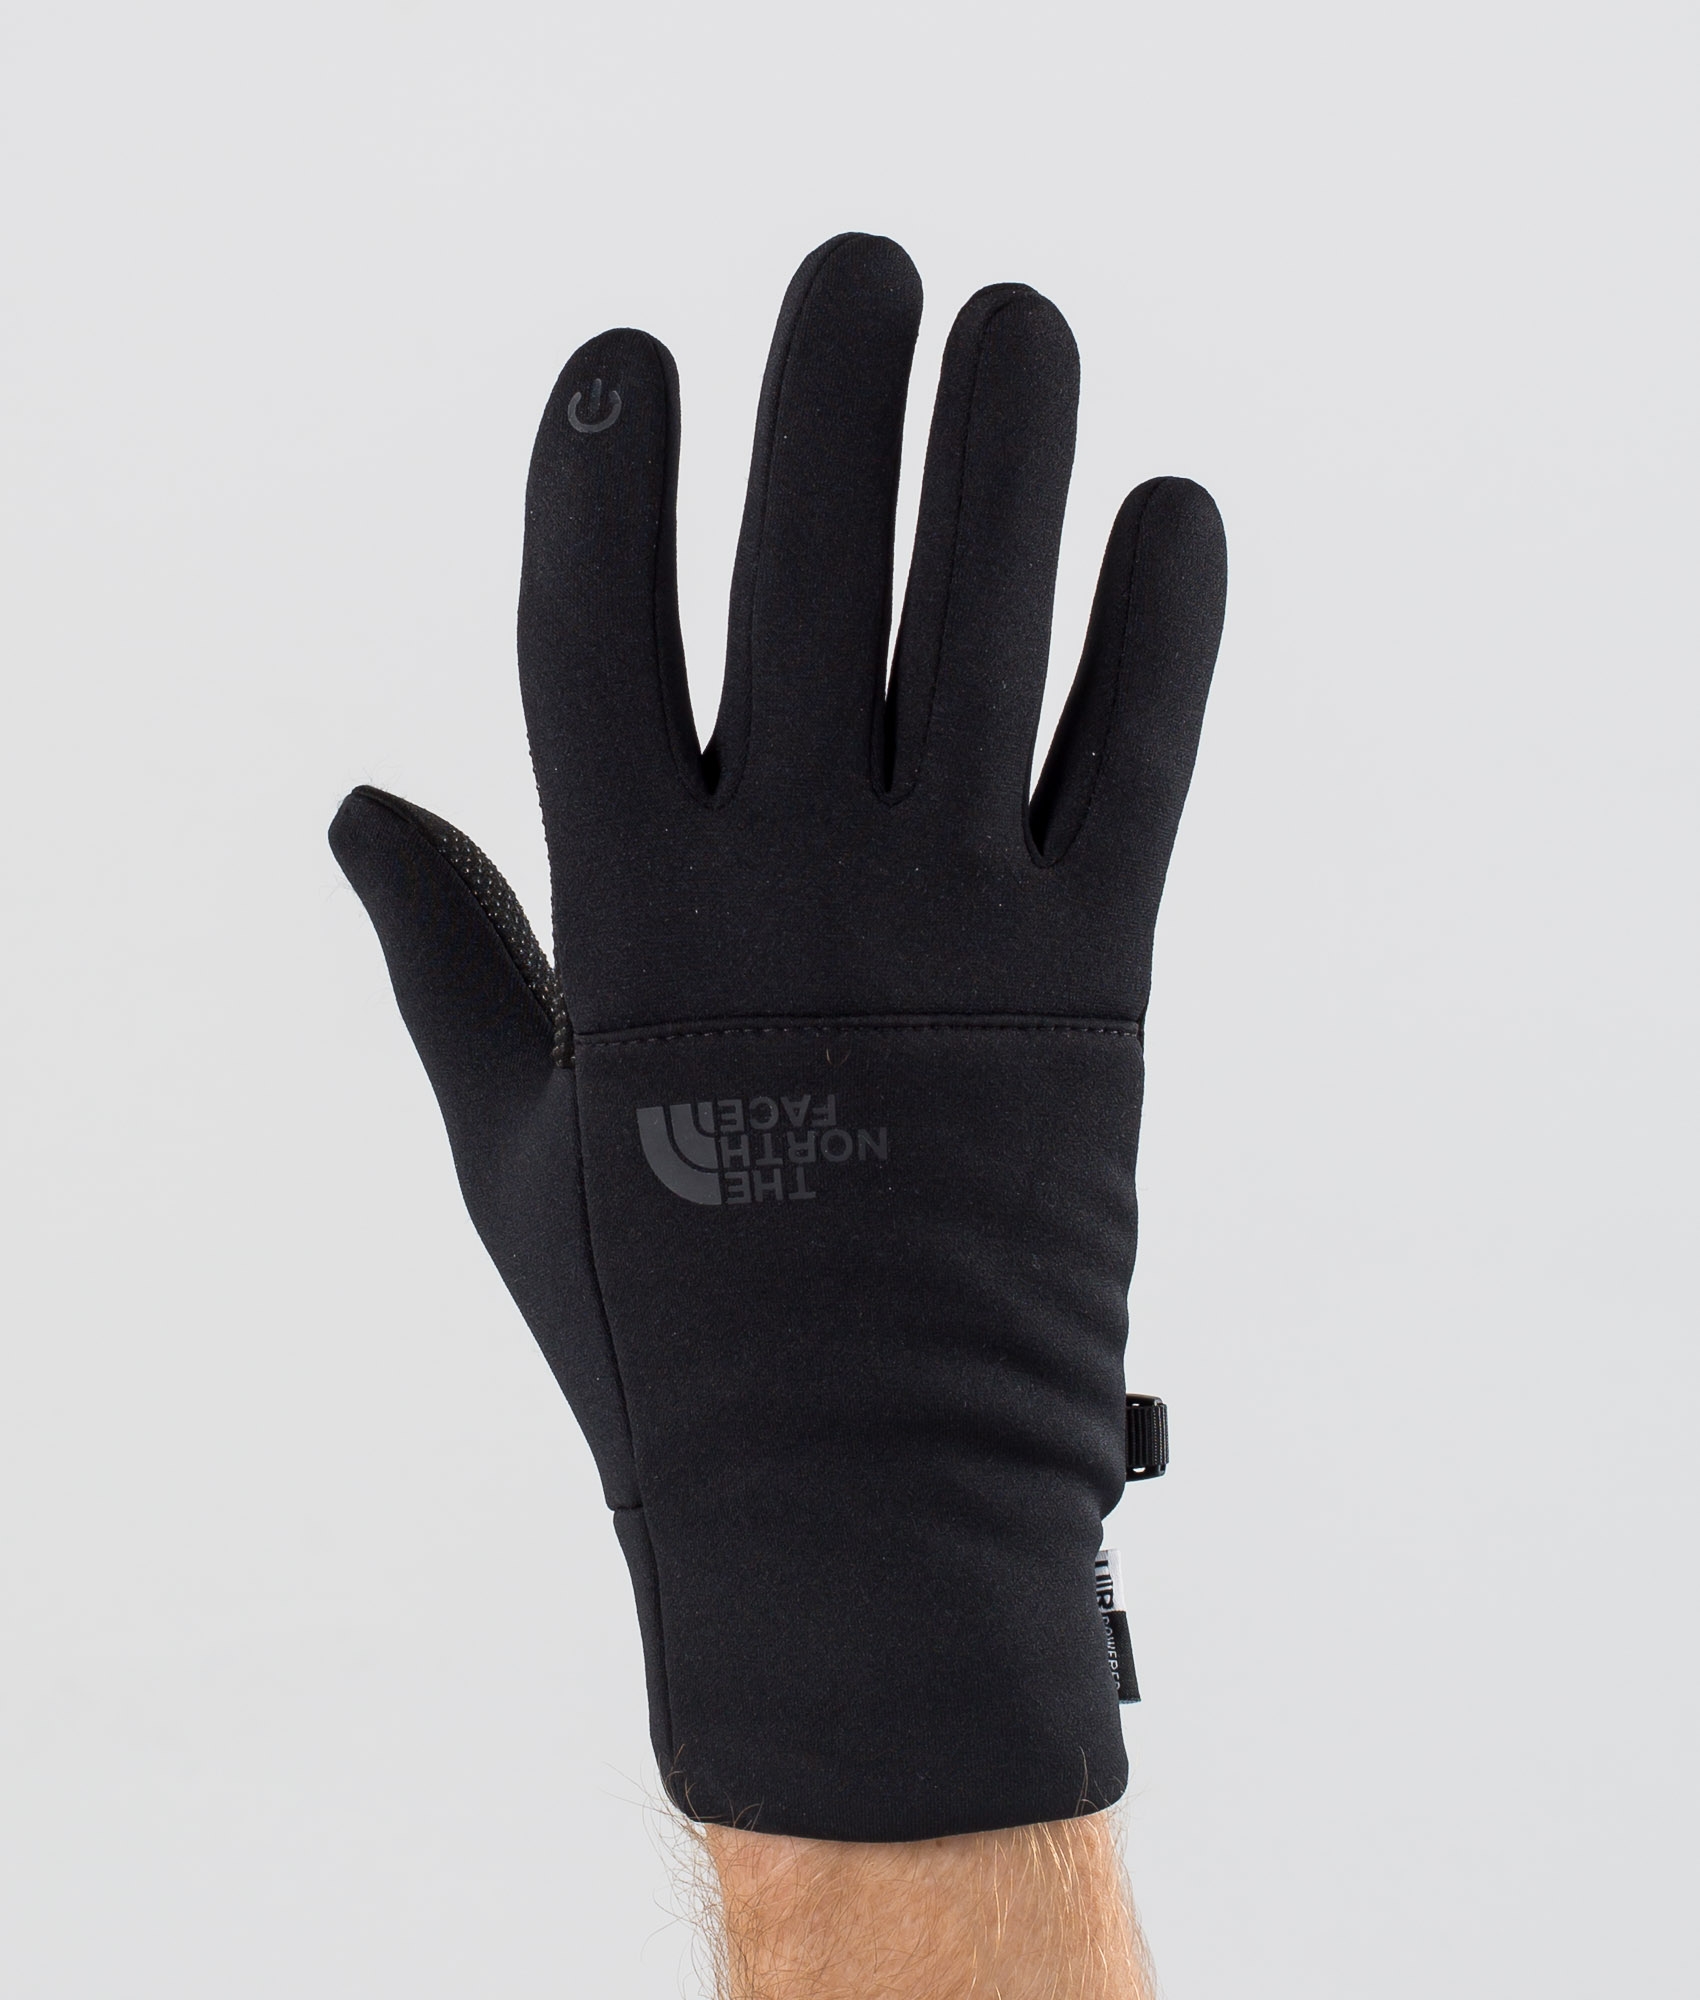 northface glove